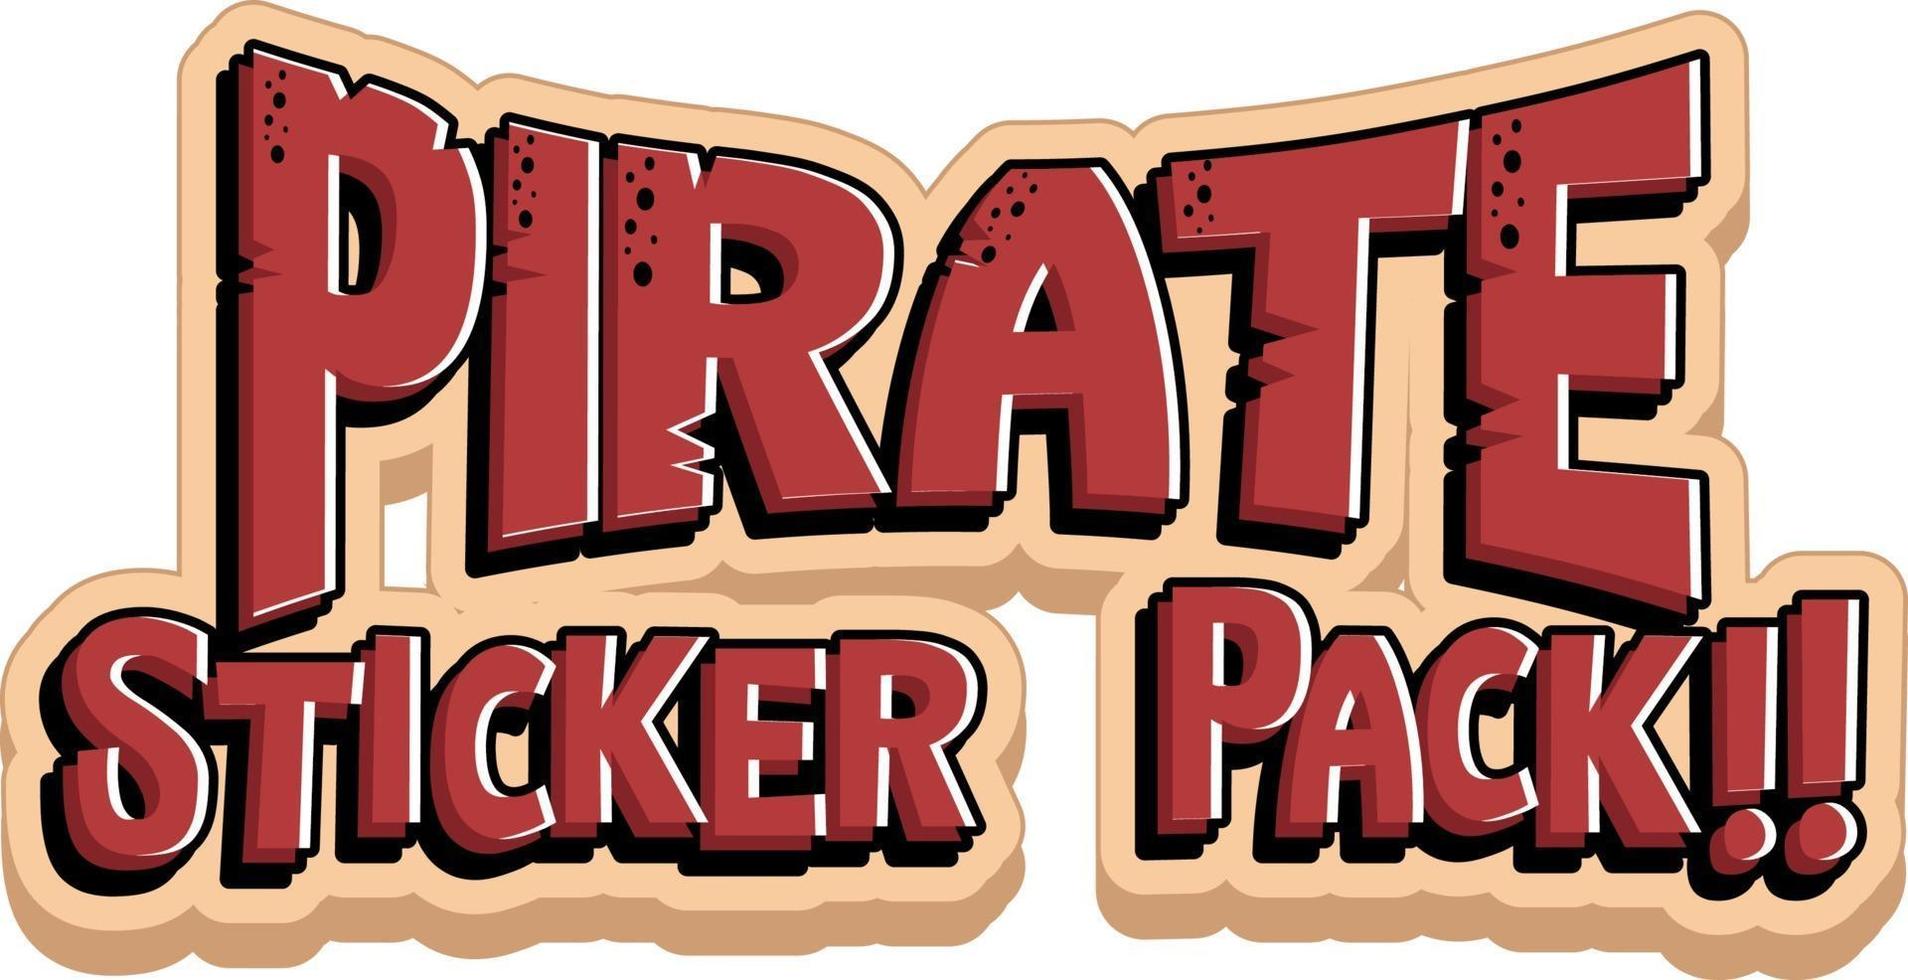 teckensnittsdesign med pirat klistermärke pack ord vektor